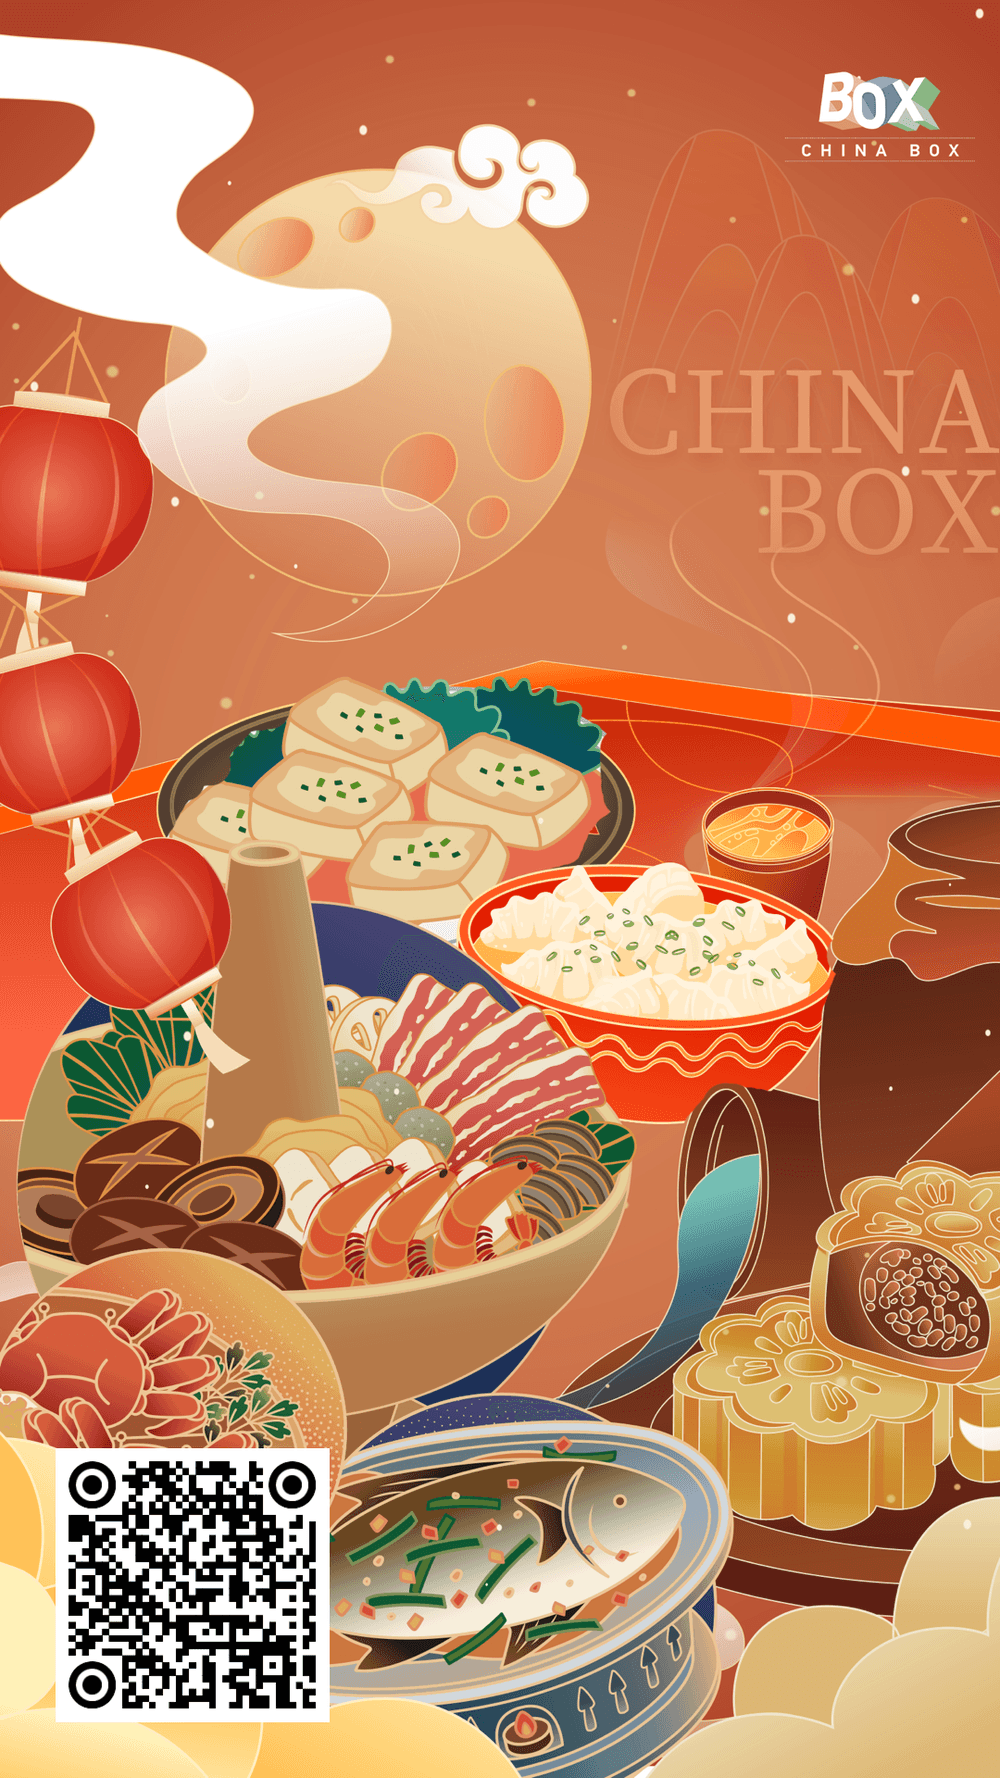 Chinese Food from China Box